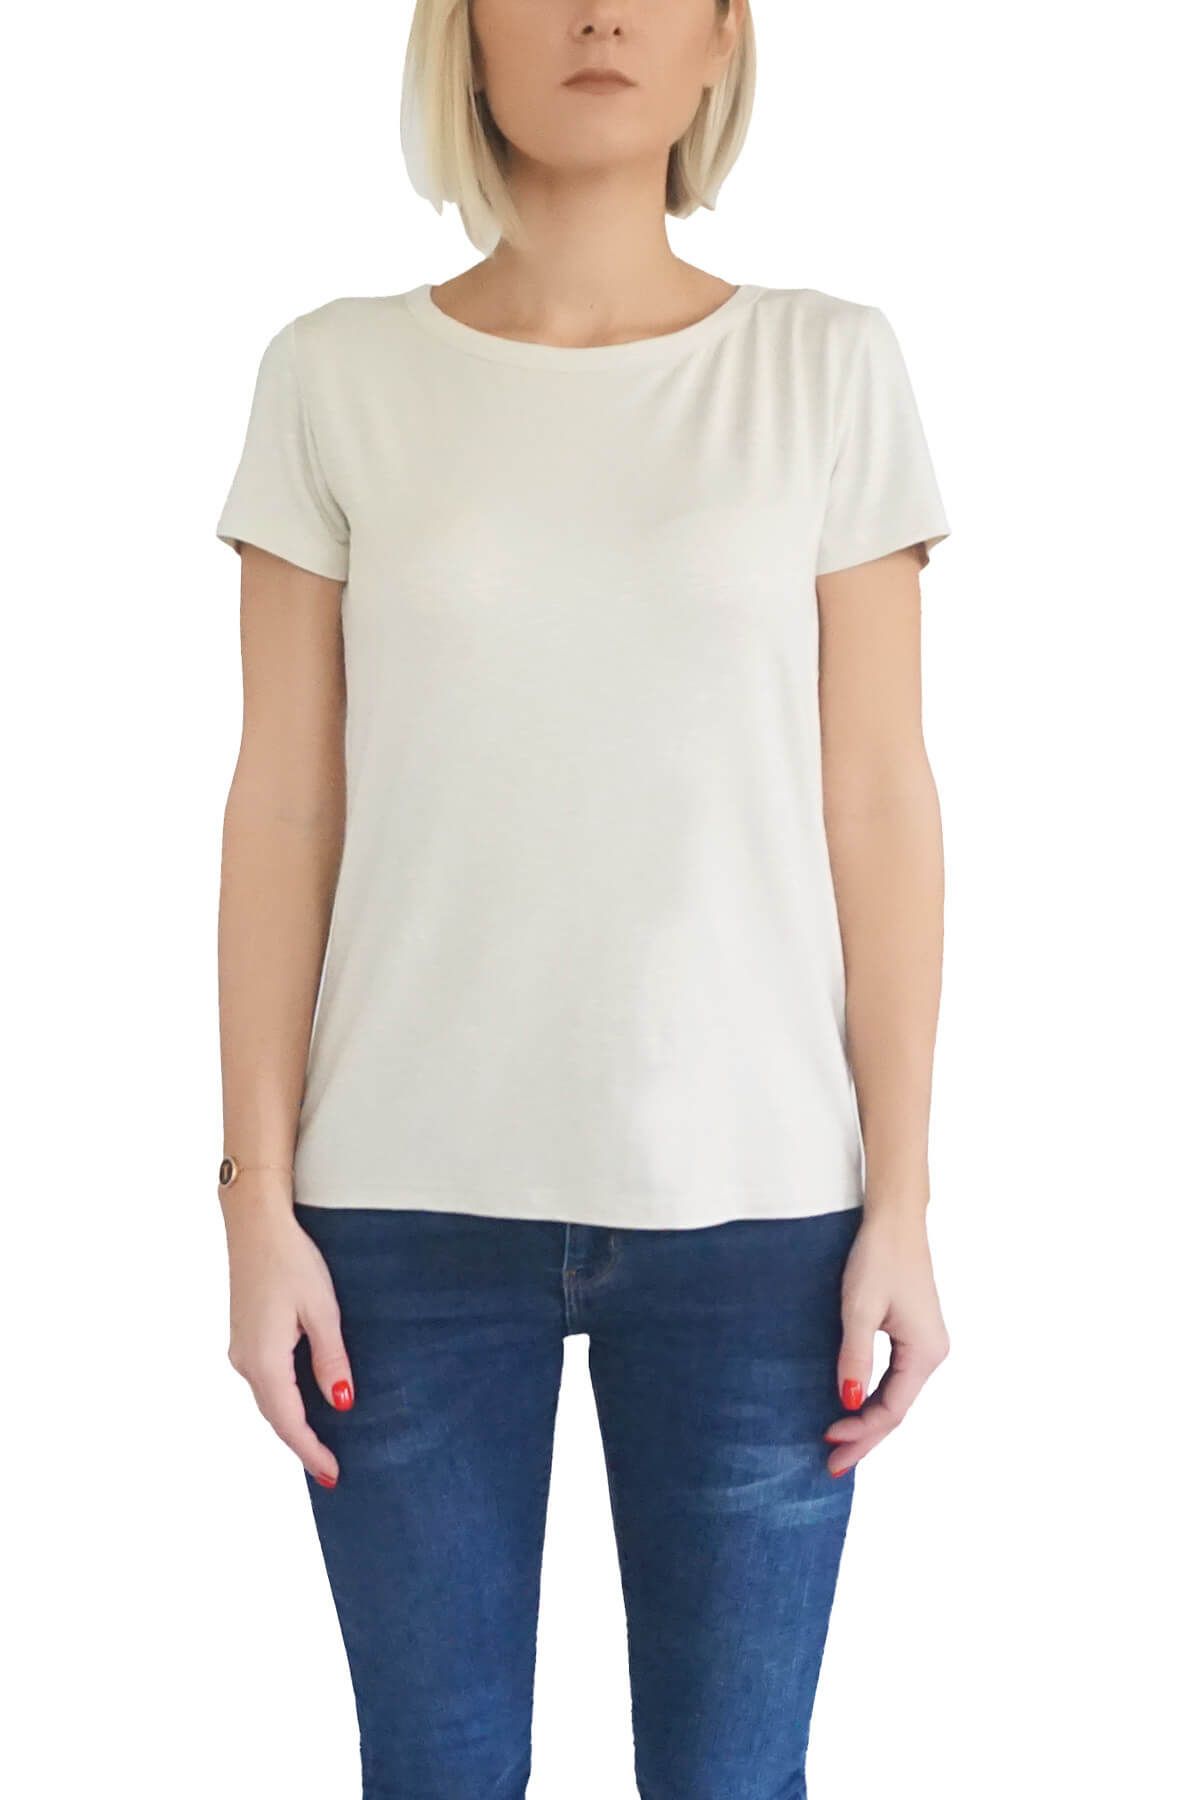 Mof Basics Kadın Taş T-Shirt BYT-T